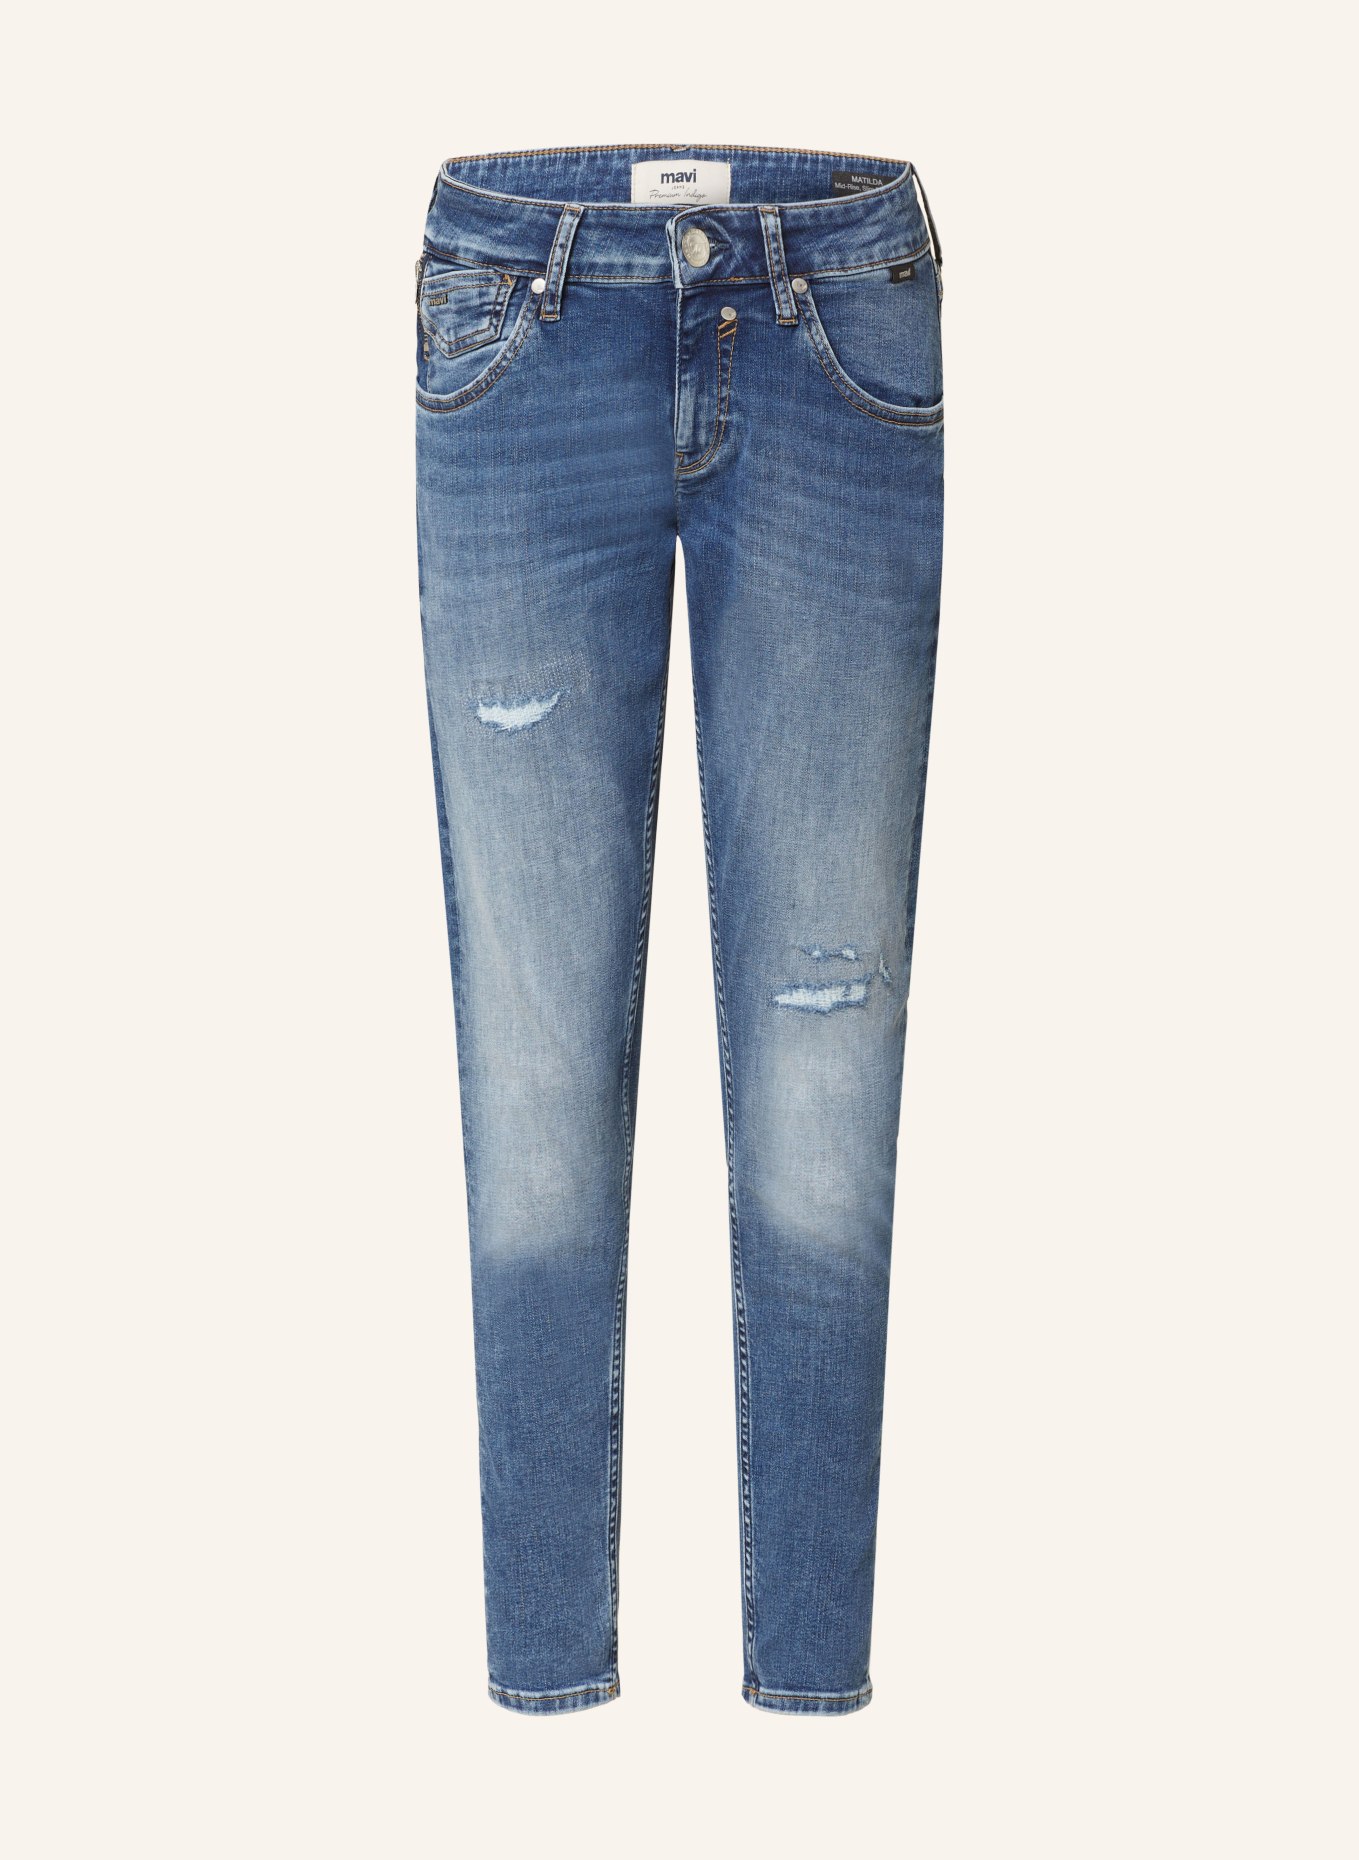 mavi Skinny Jeans MATILDA, Farbe: 86318 mid blue brushed premium indig (Bild 1)